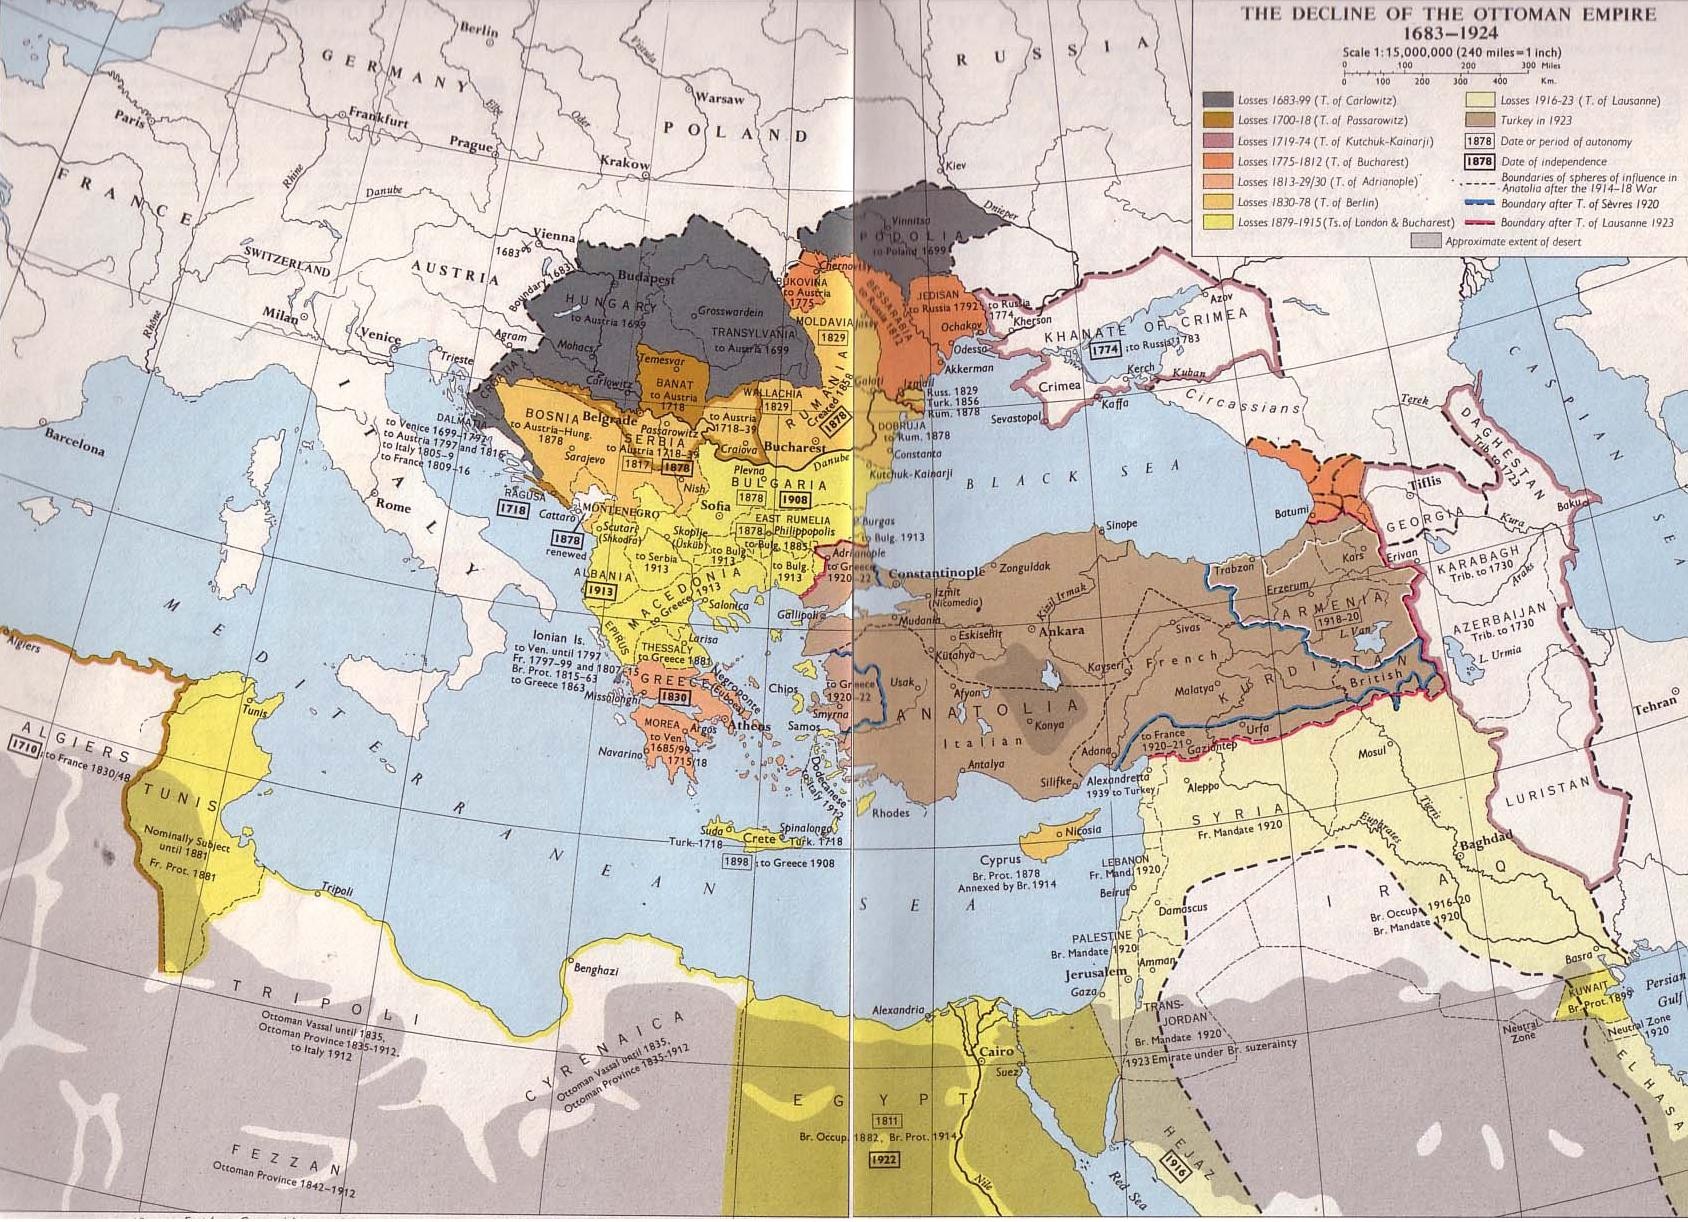 ottoman-Decline-of-the-ottoman-empire-1683-1924.jpg